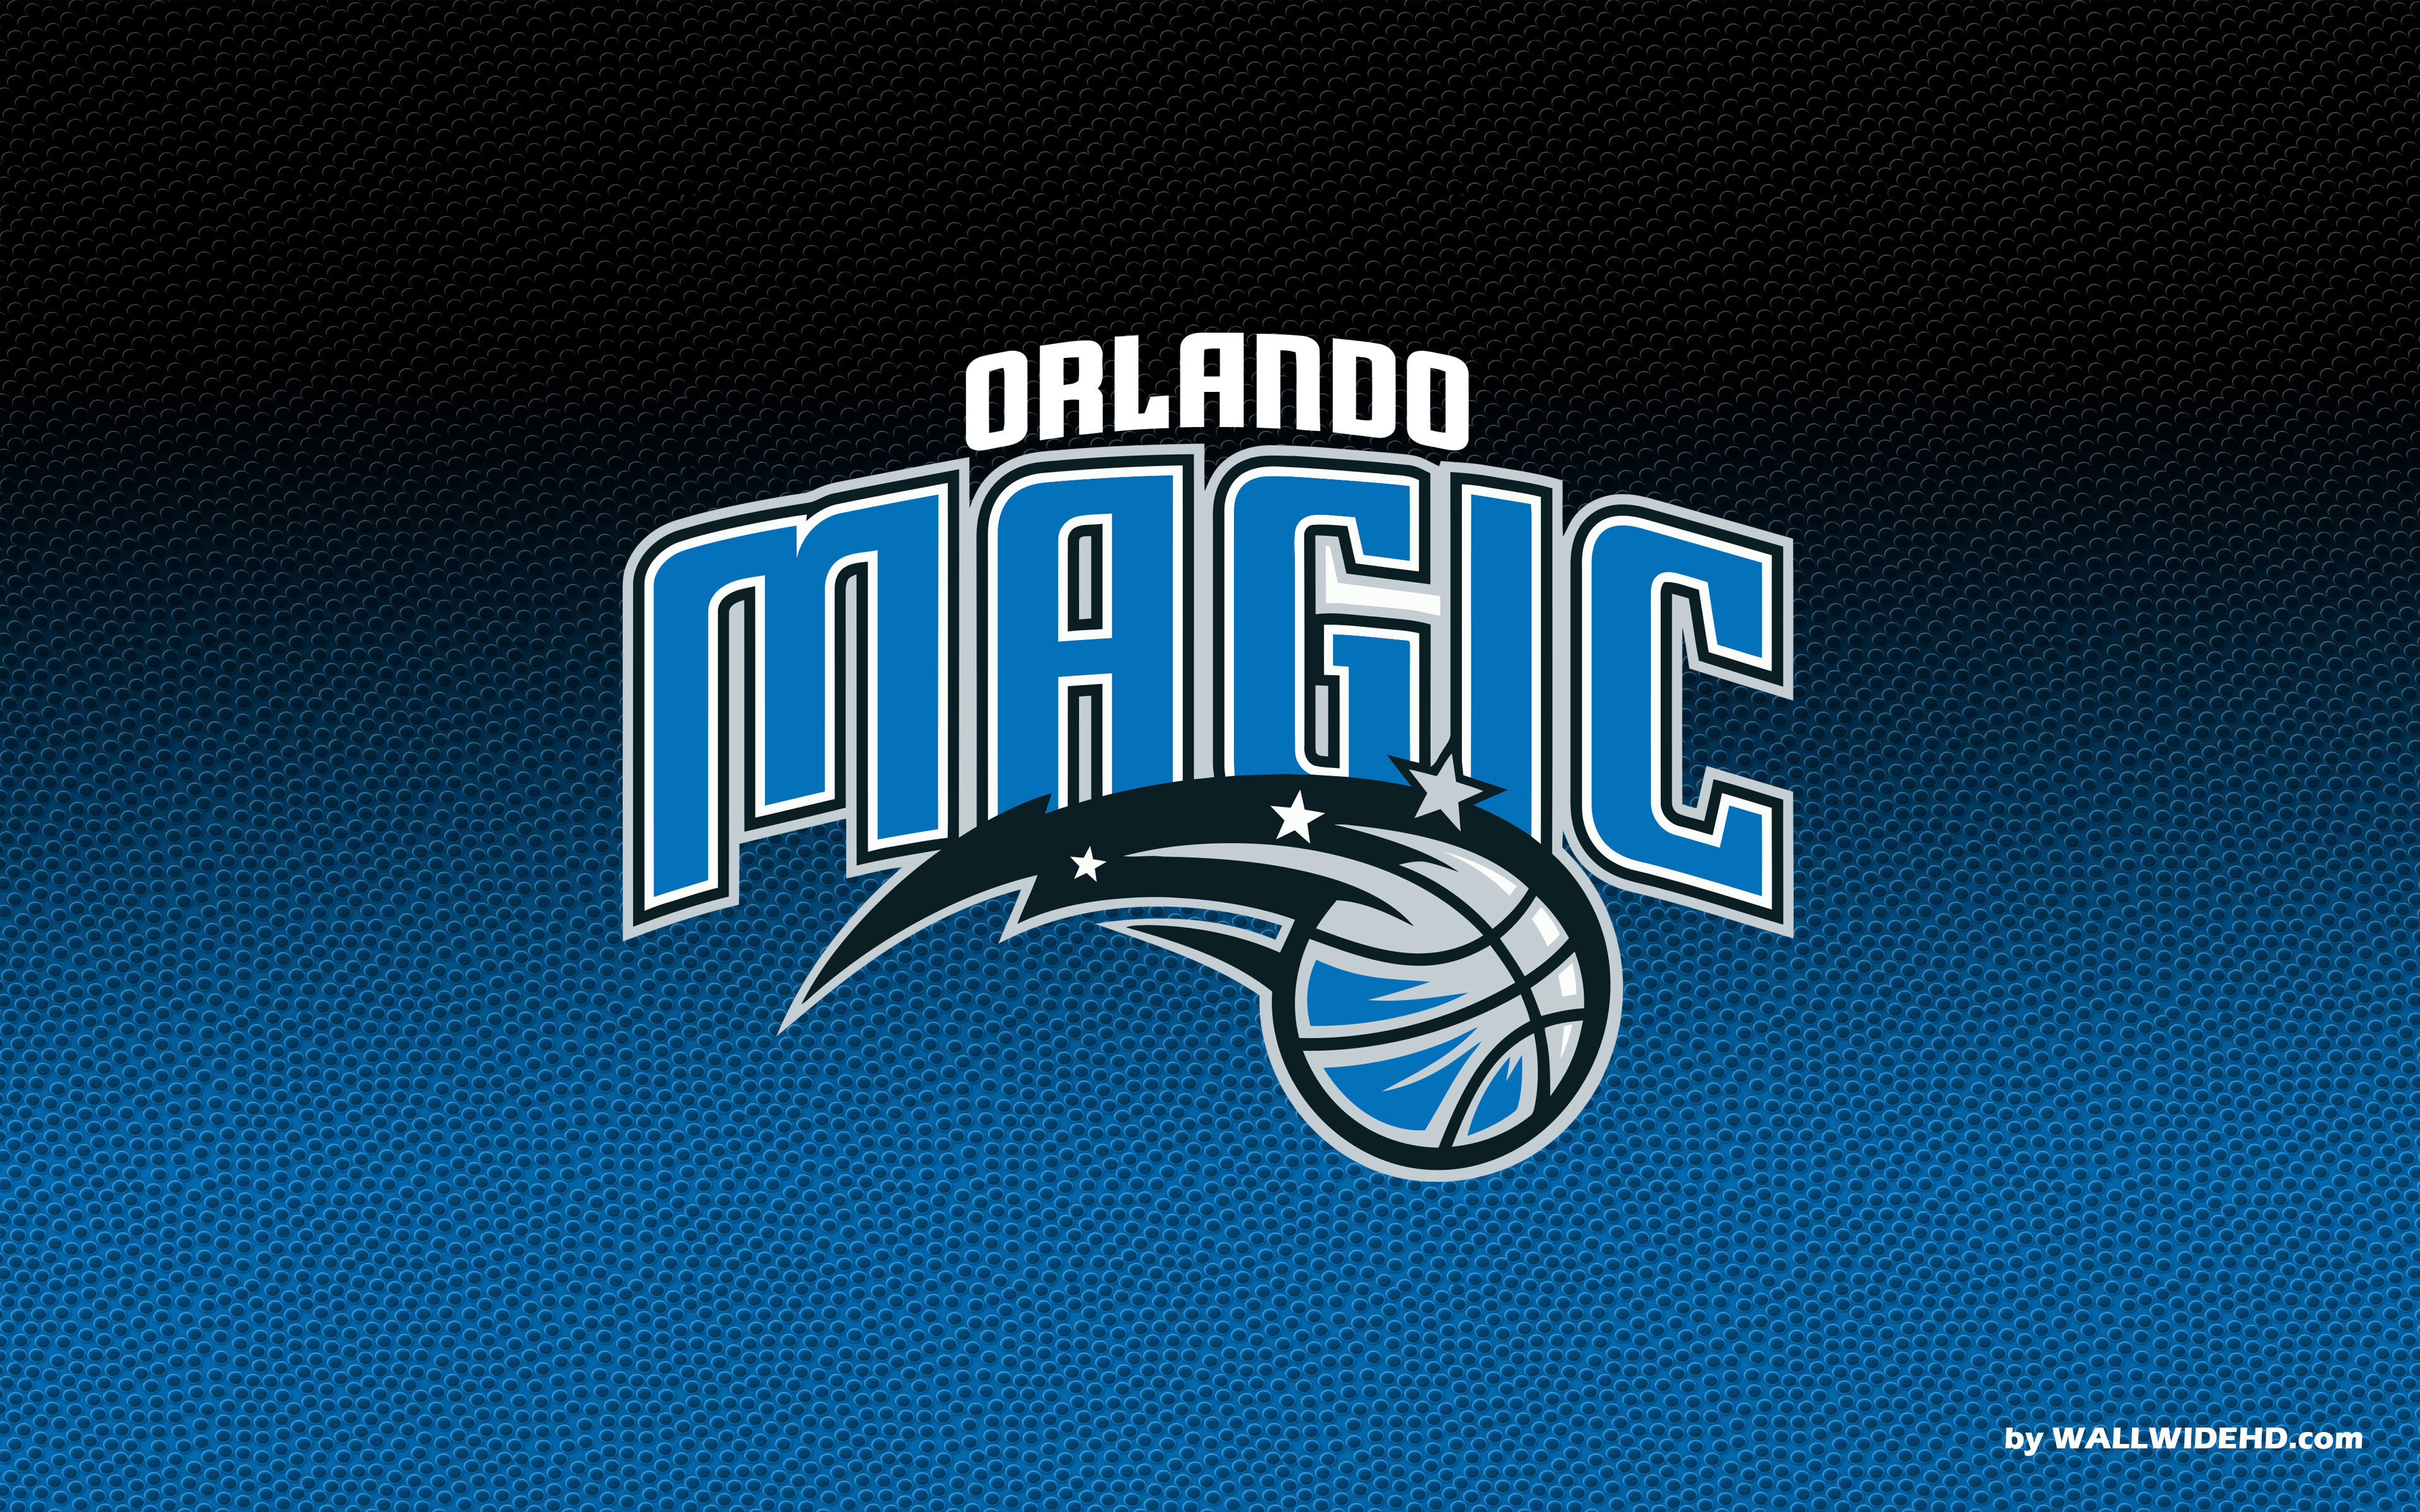 Orlando Magic wallpaper by JeremyNeal1  Download on ZEDGE  9eaf